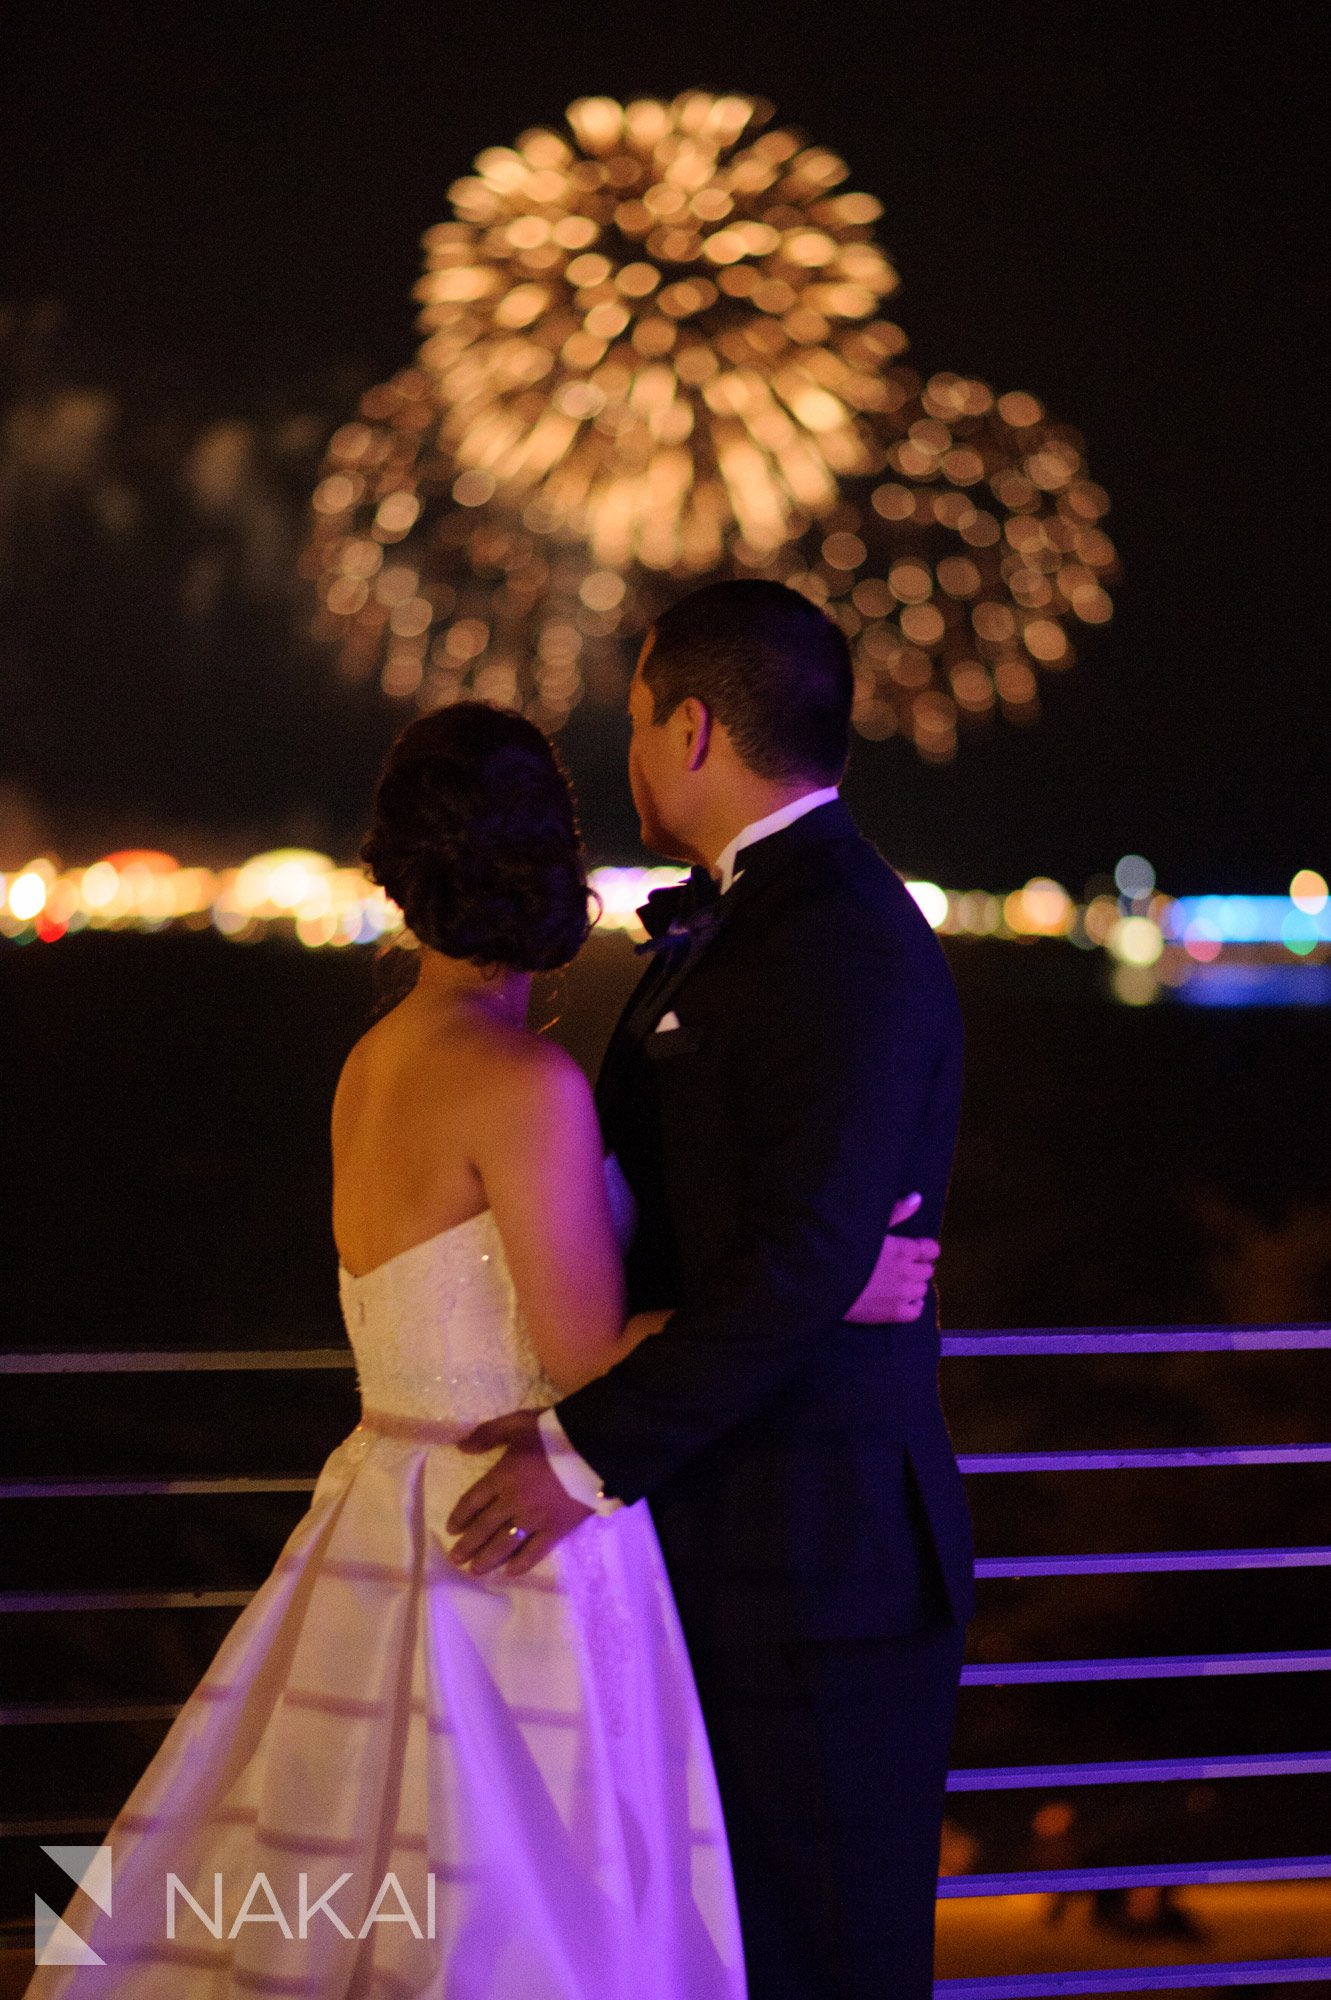 chicago wedding fireworks adler planetarium pictures